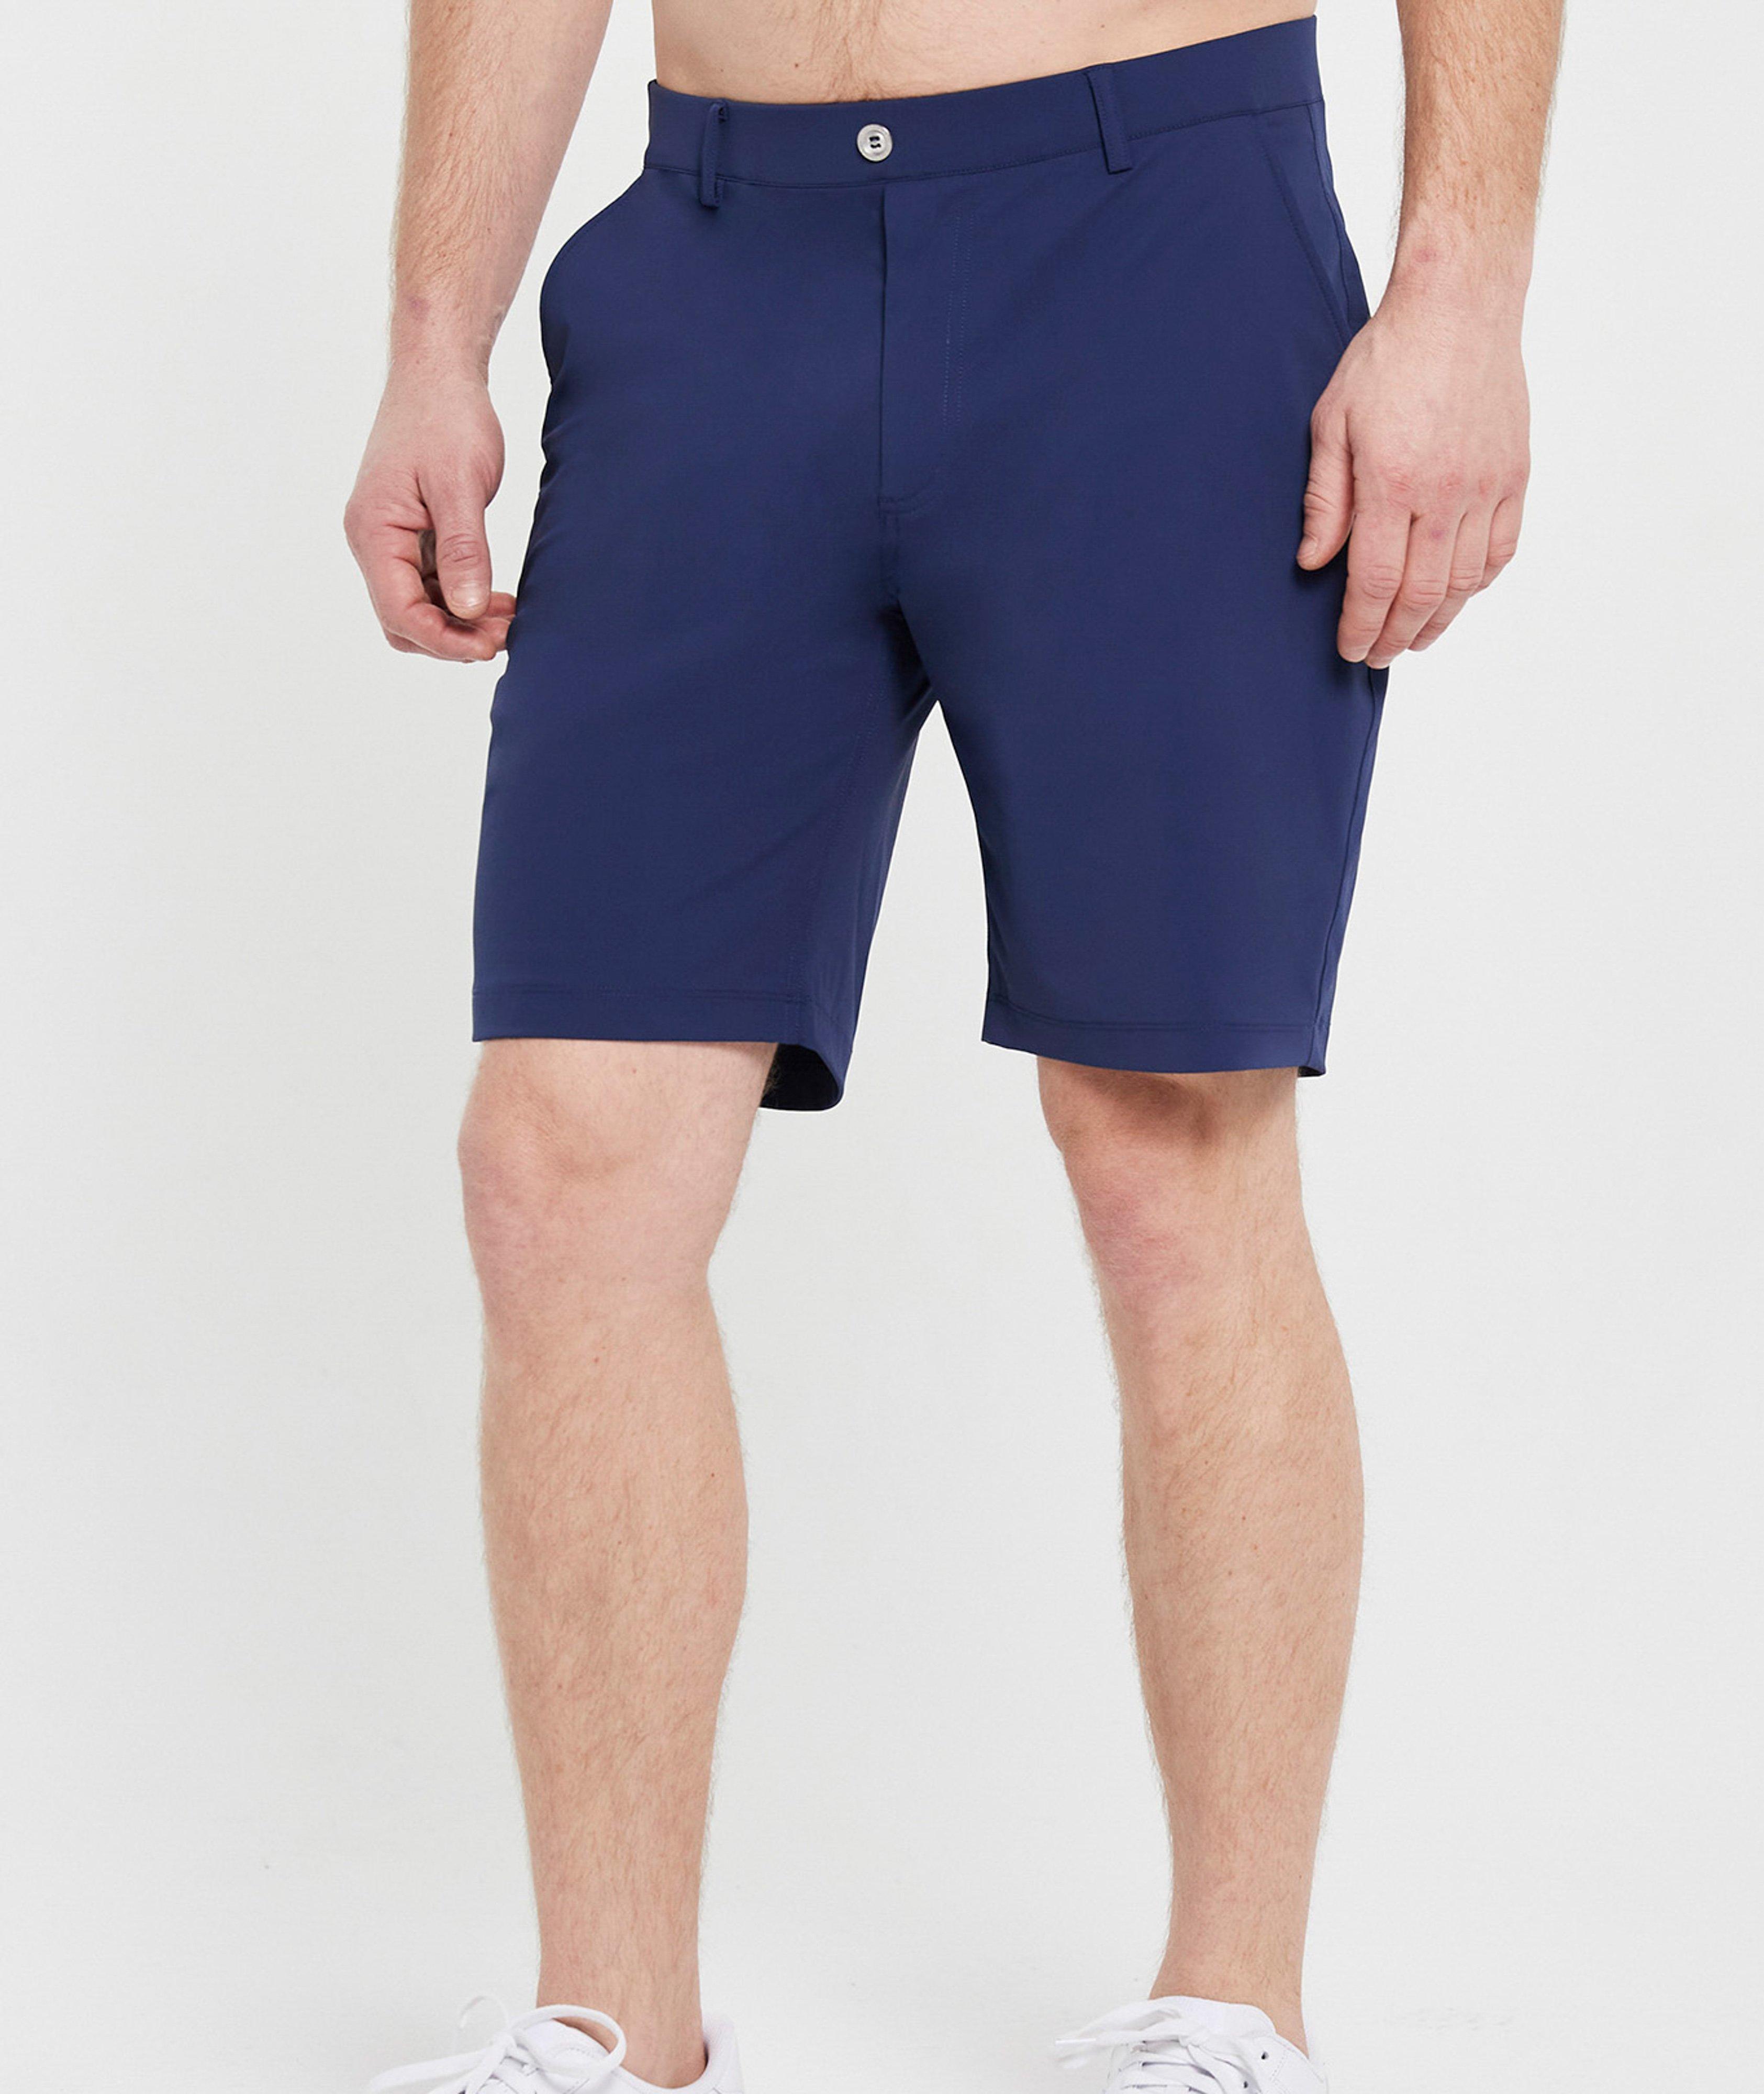 Hanover Pull-On Shorts image 1